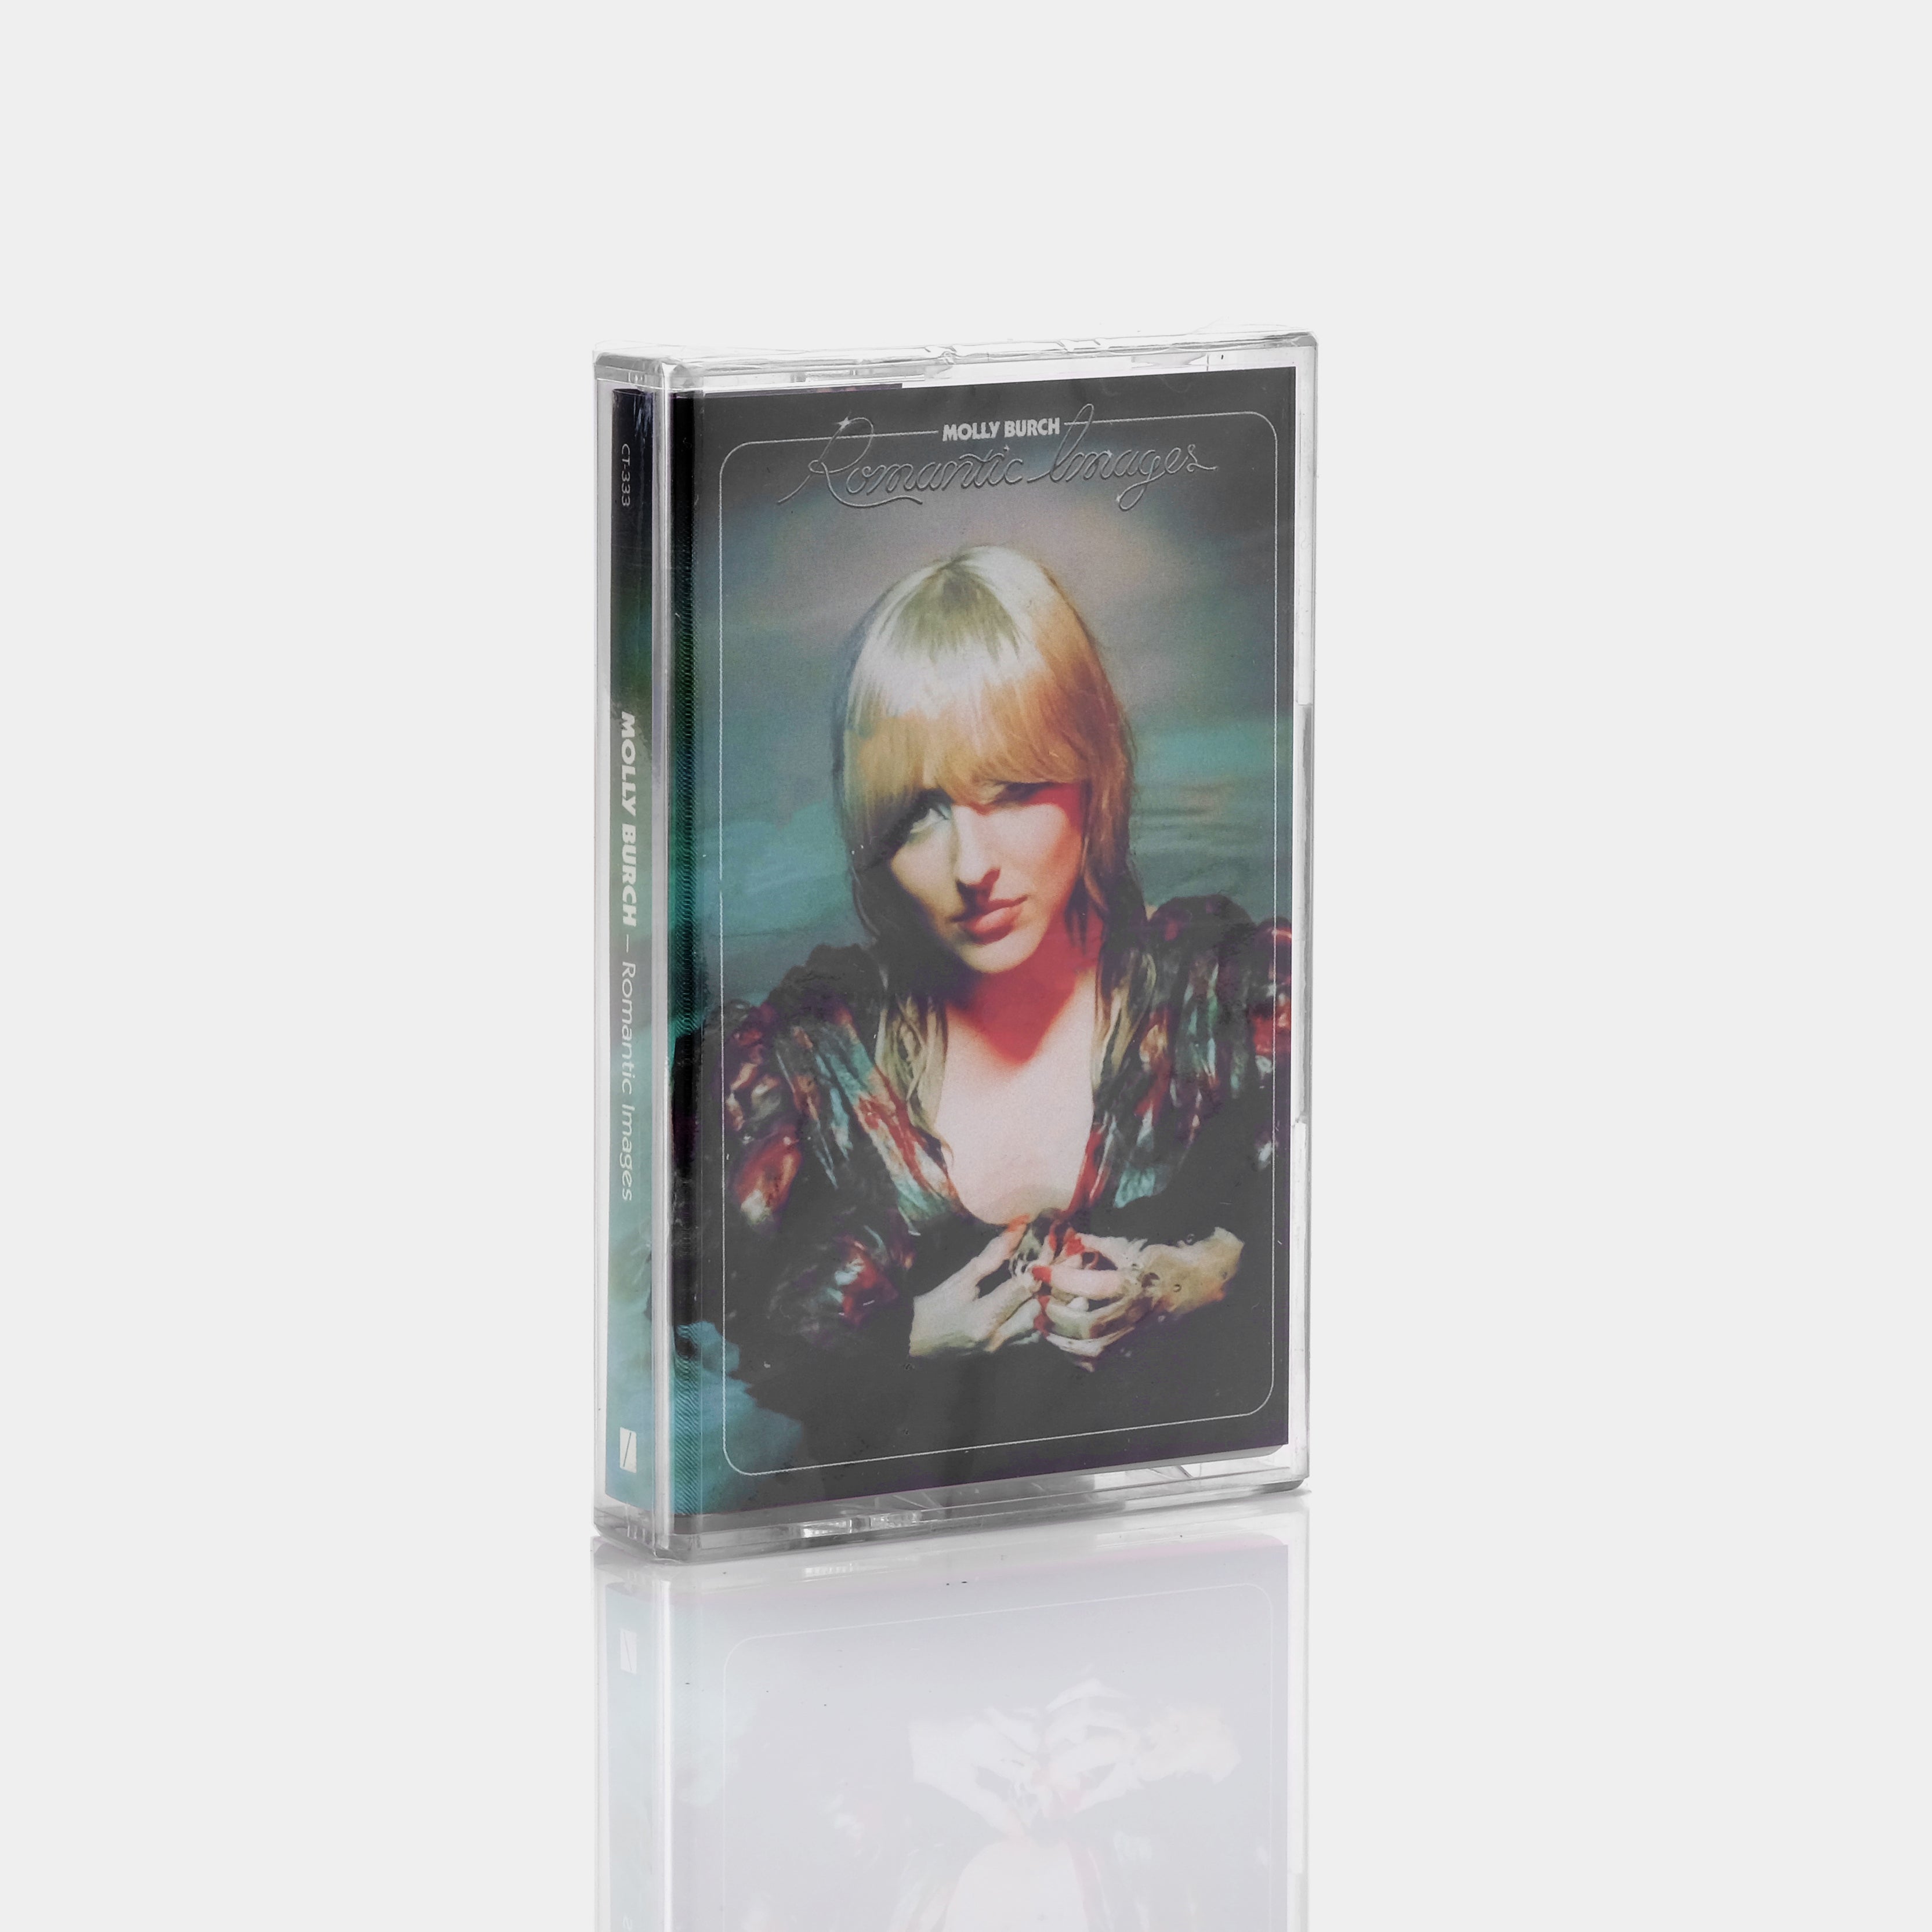 Molly Burch - Romantic Images Cassette Tape